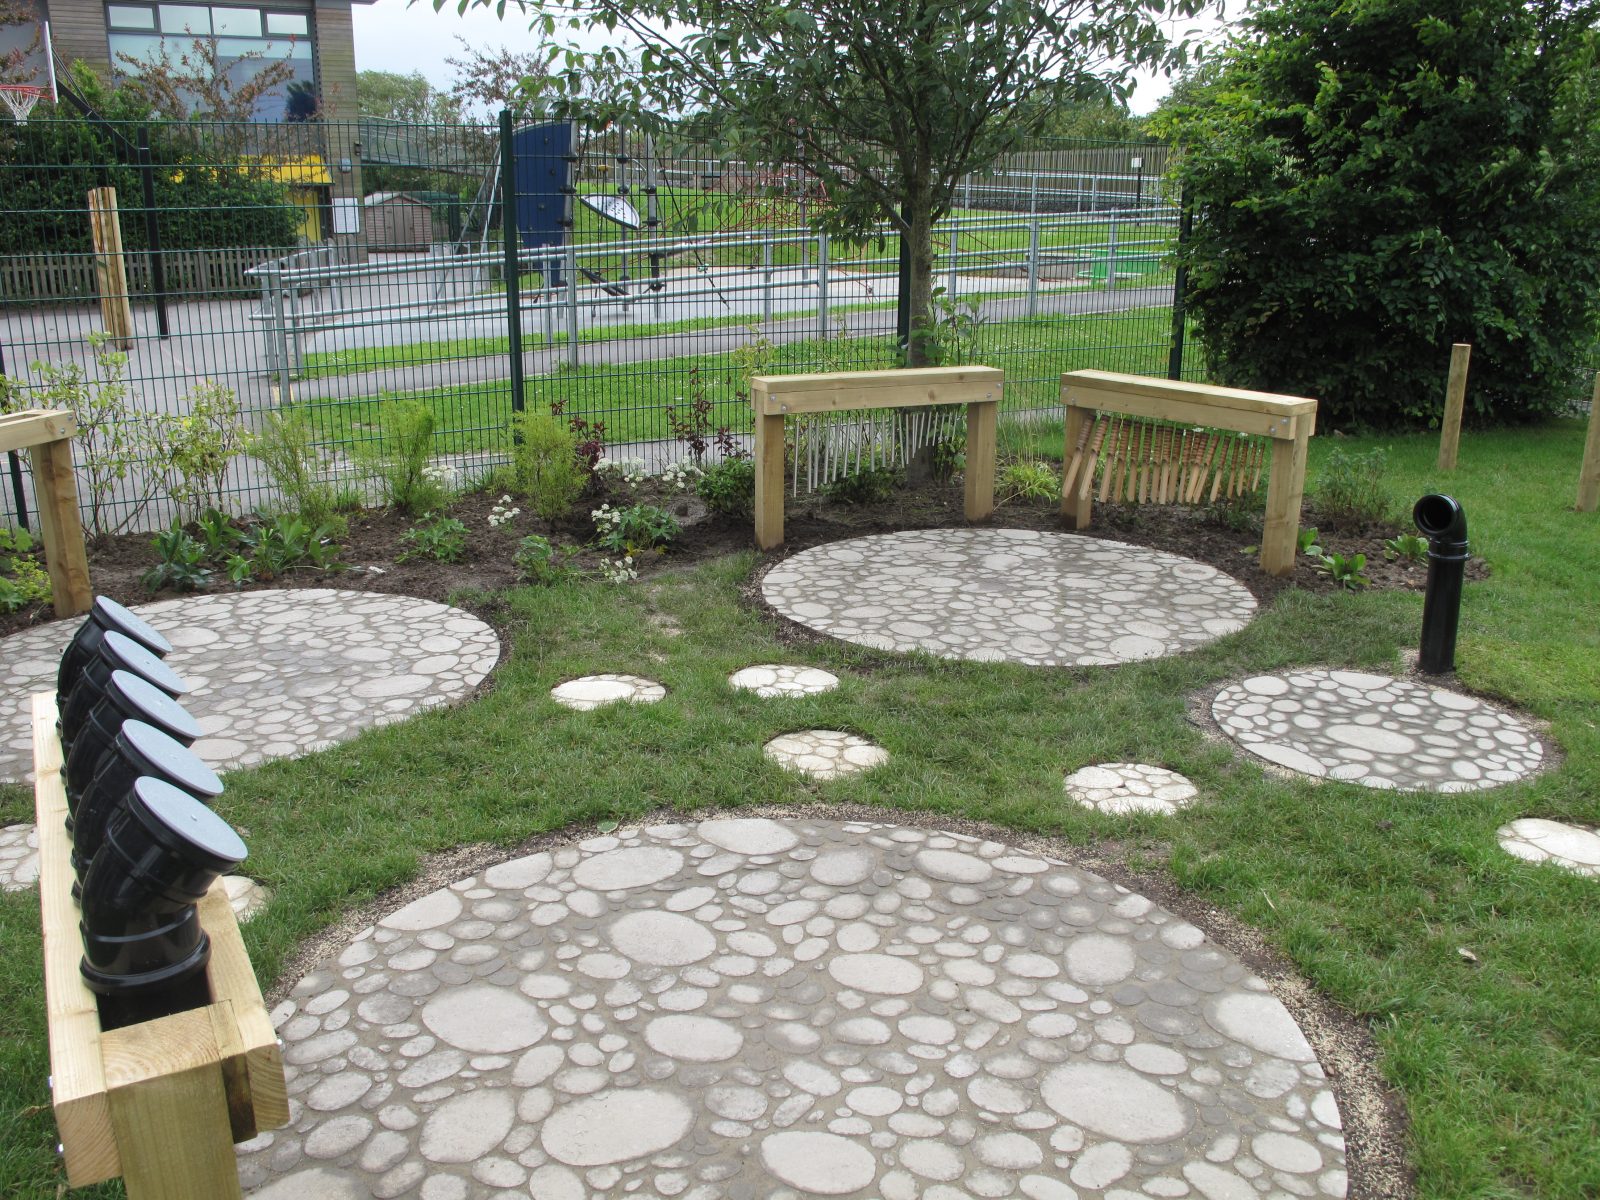 School garden in Weston-super-Mare